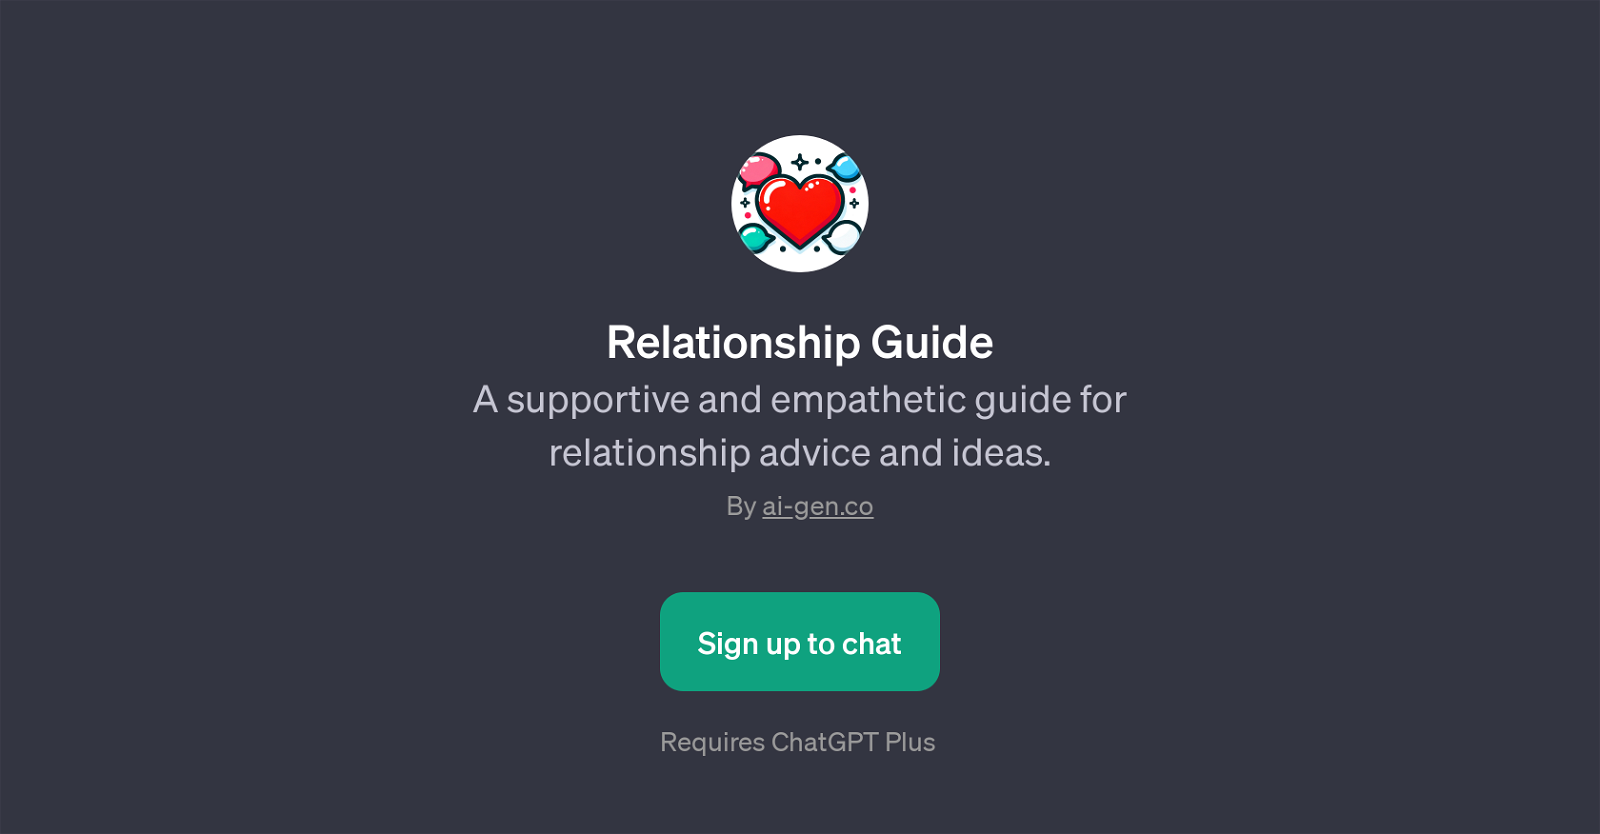 Relationship Guide website